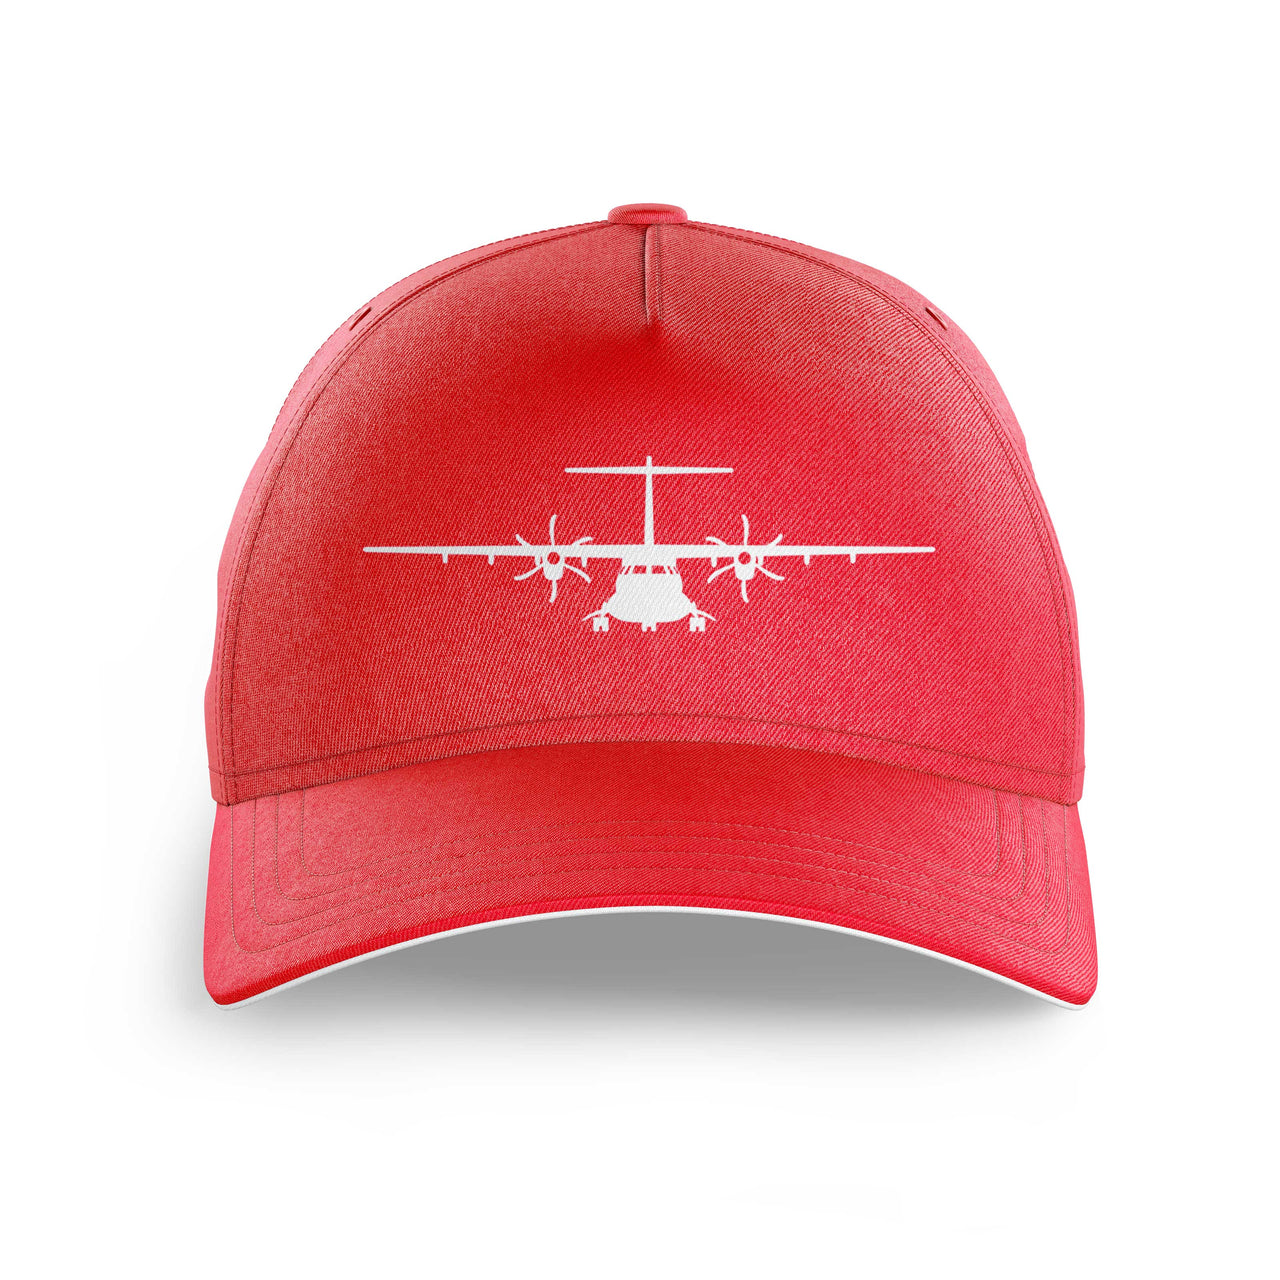 ATR-72 Silhouette Printed Hats